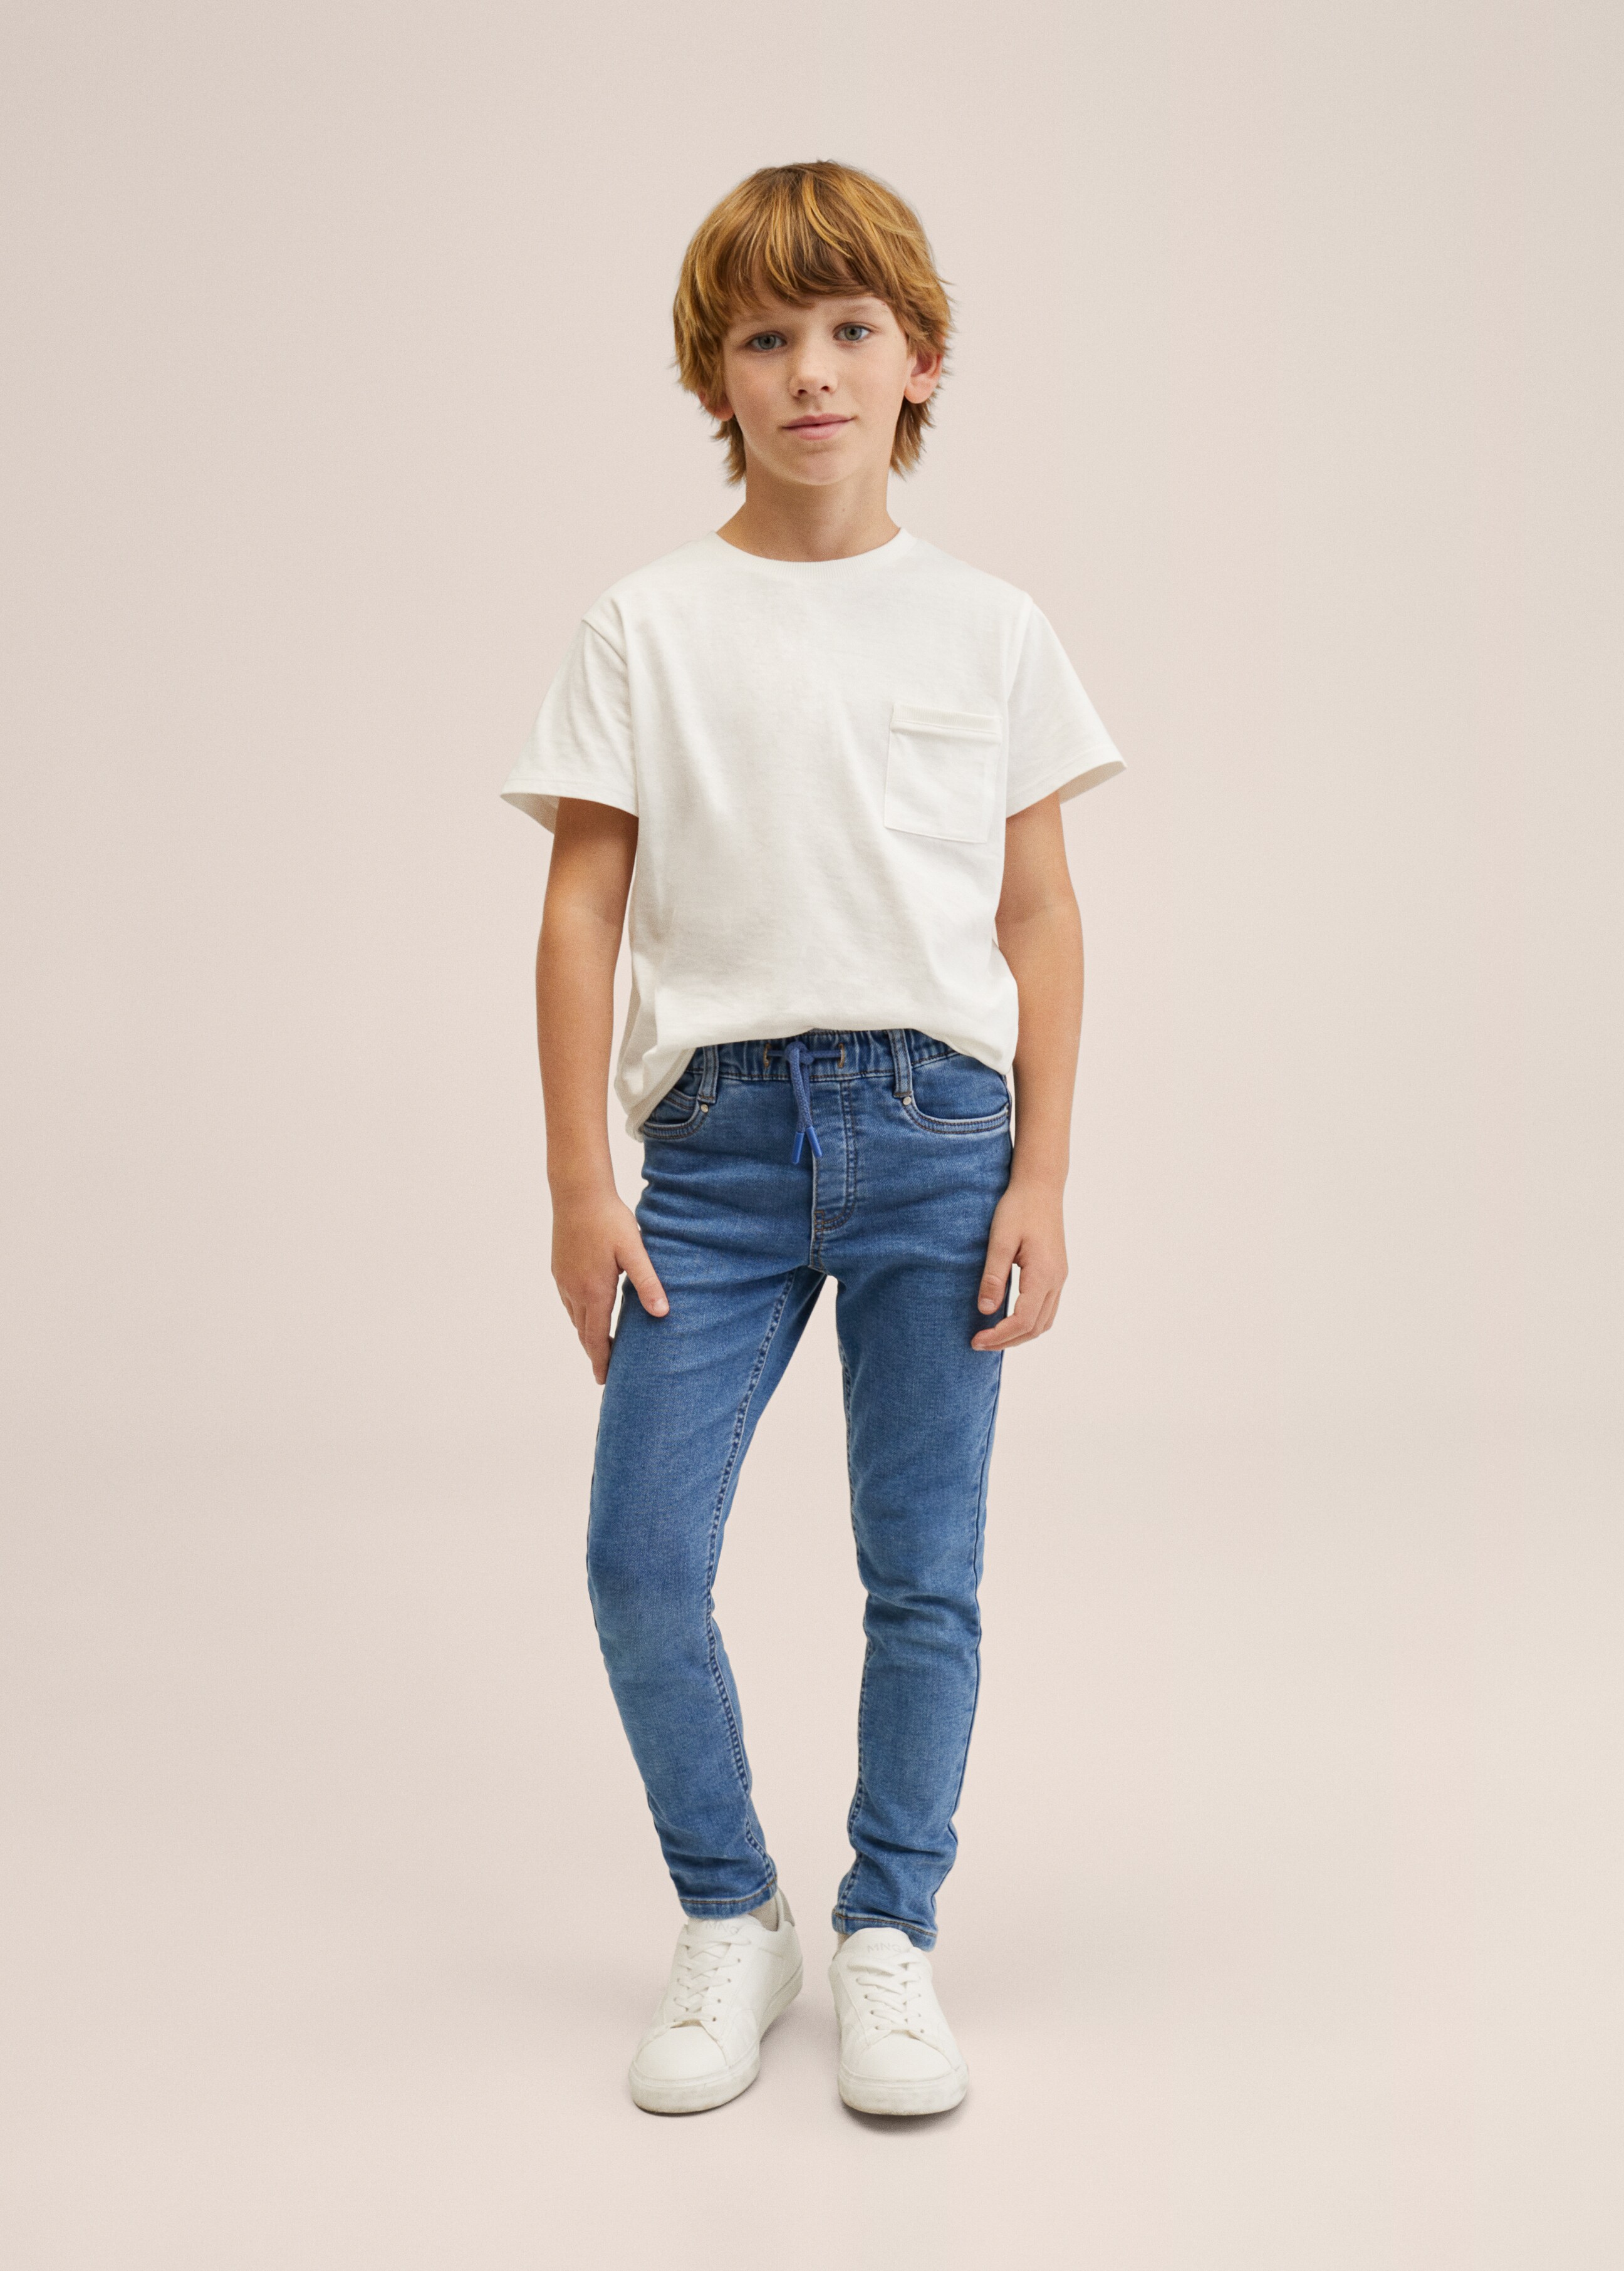 Lace drawstring waist jeans - General plane